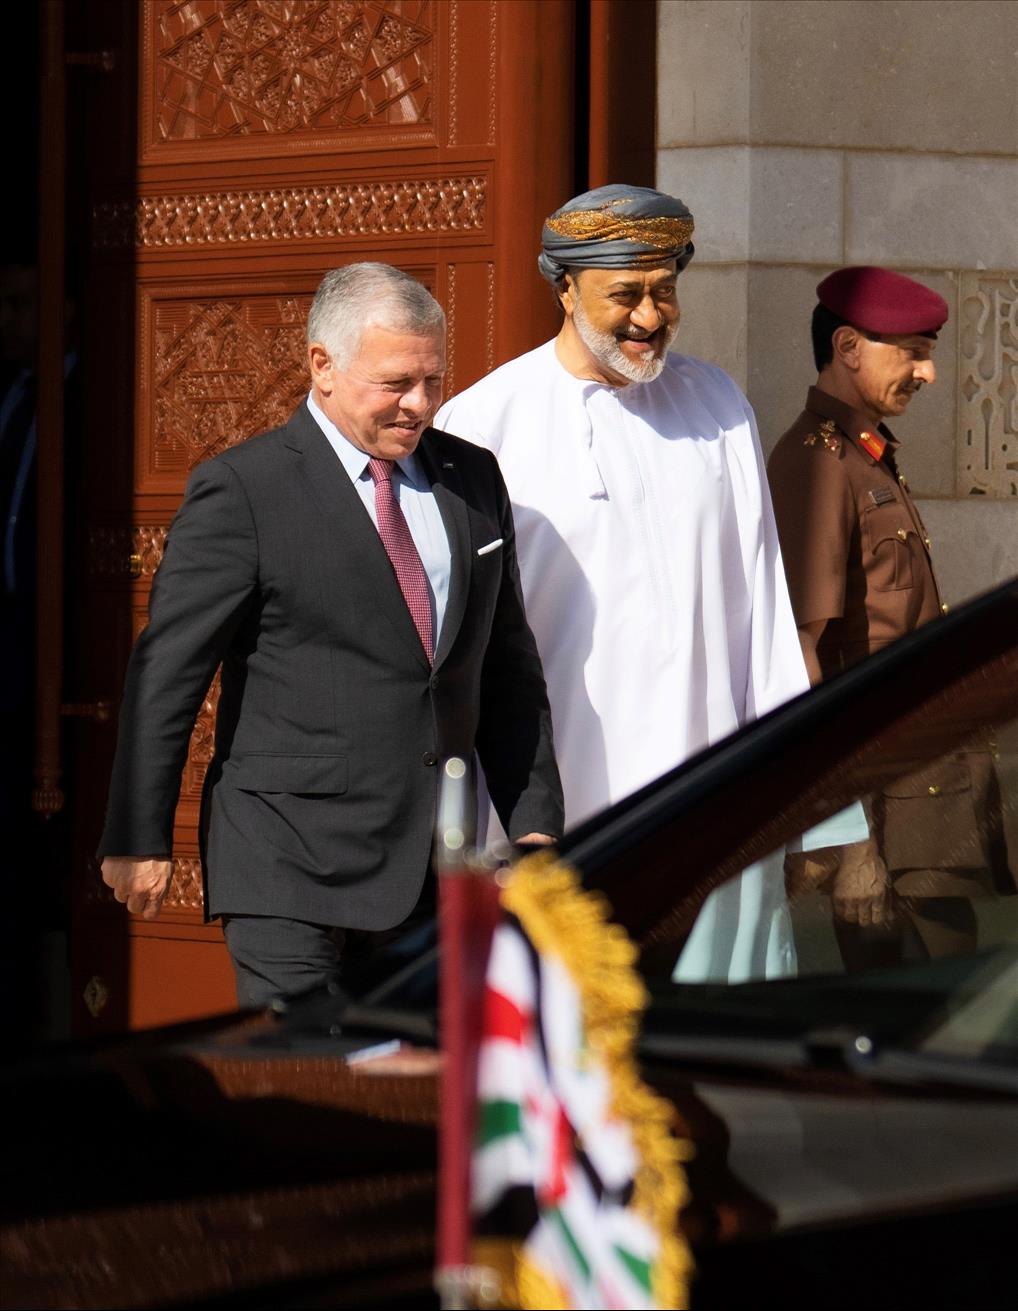 King Voices Appreciation For Sultan Of Oman, Omani People